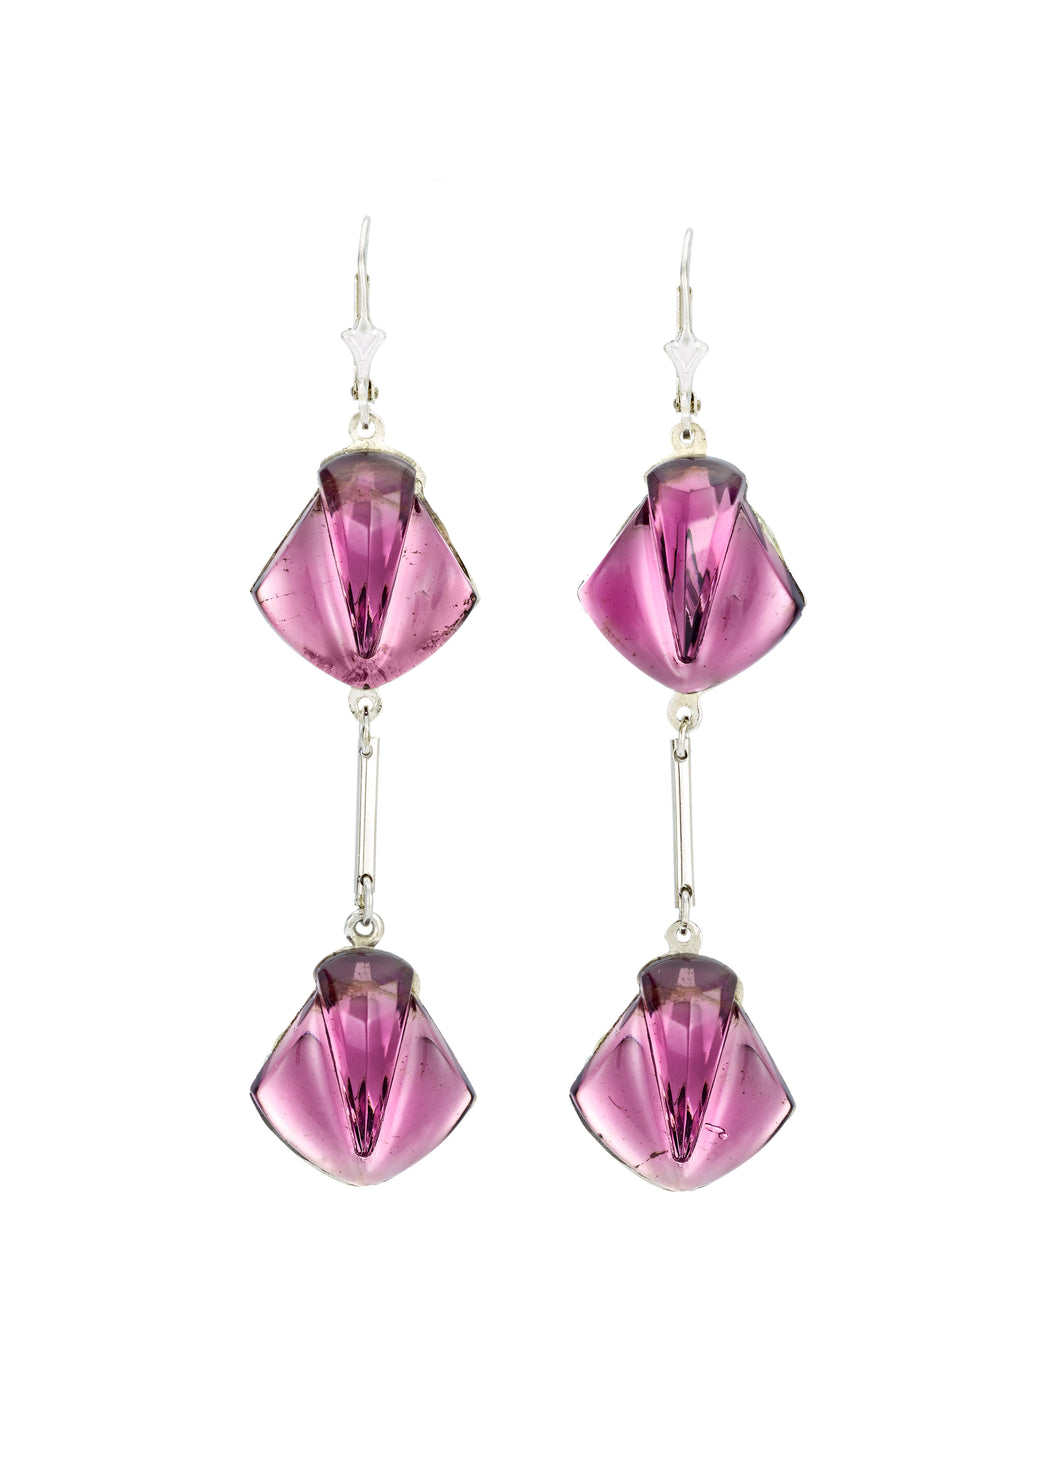 Pontiel Jewelry | Estelle Earrings with Amethyst Glass Cabochons 